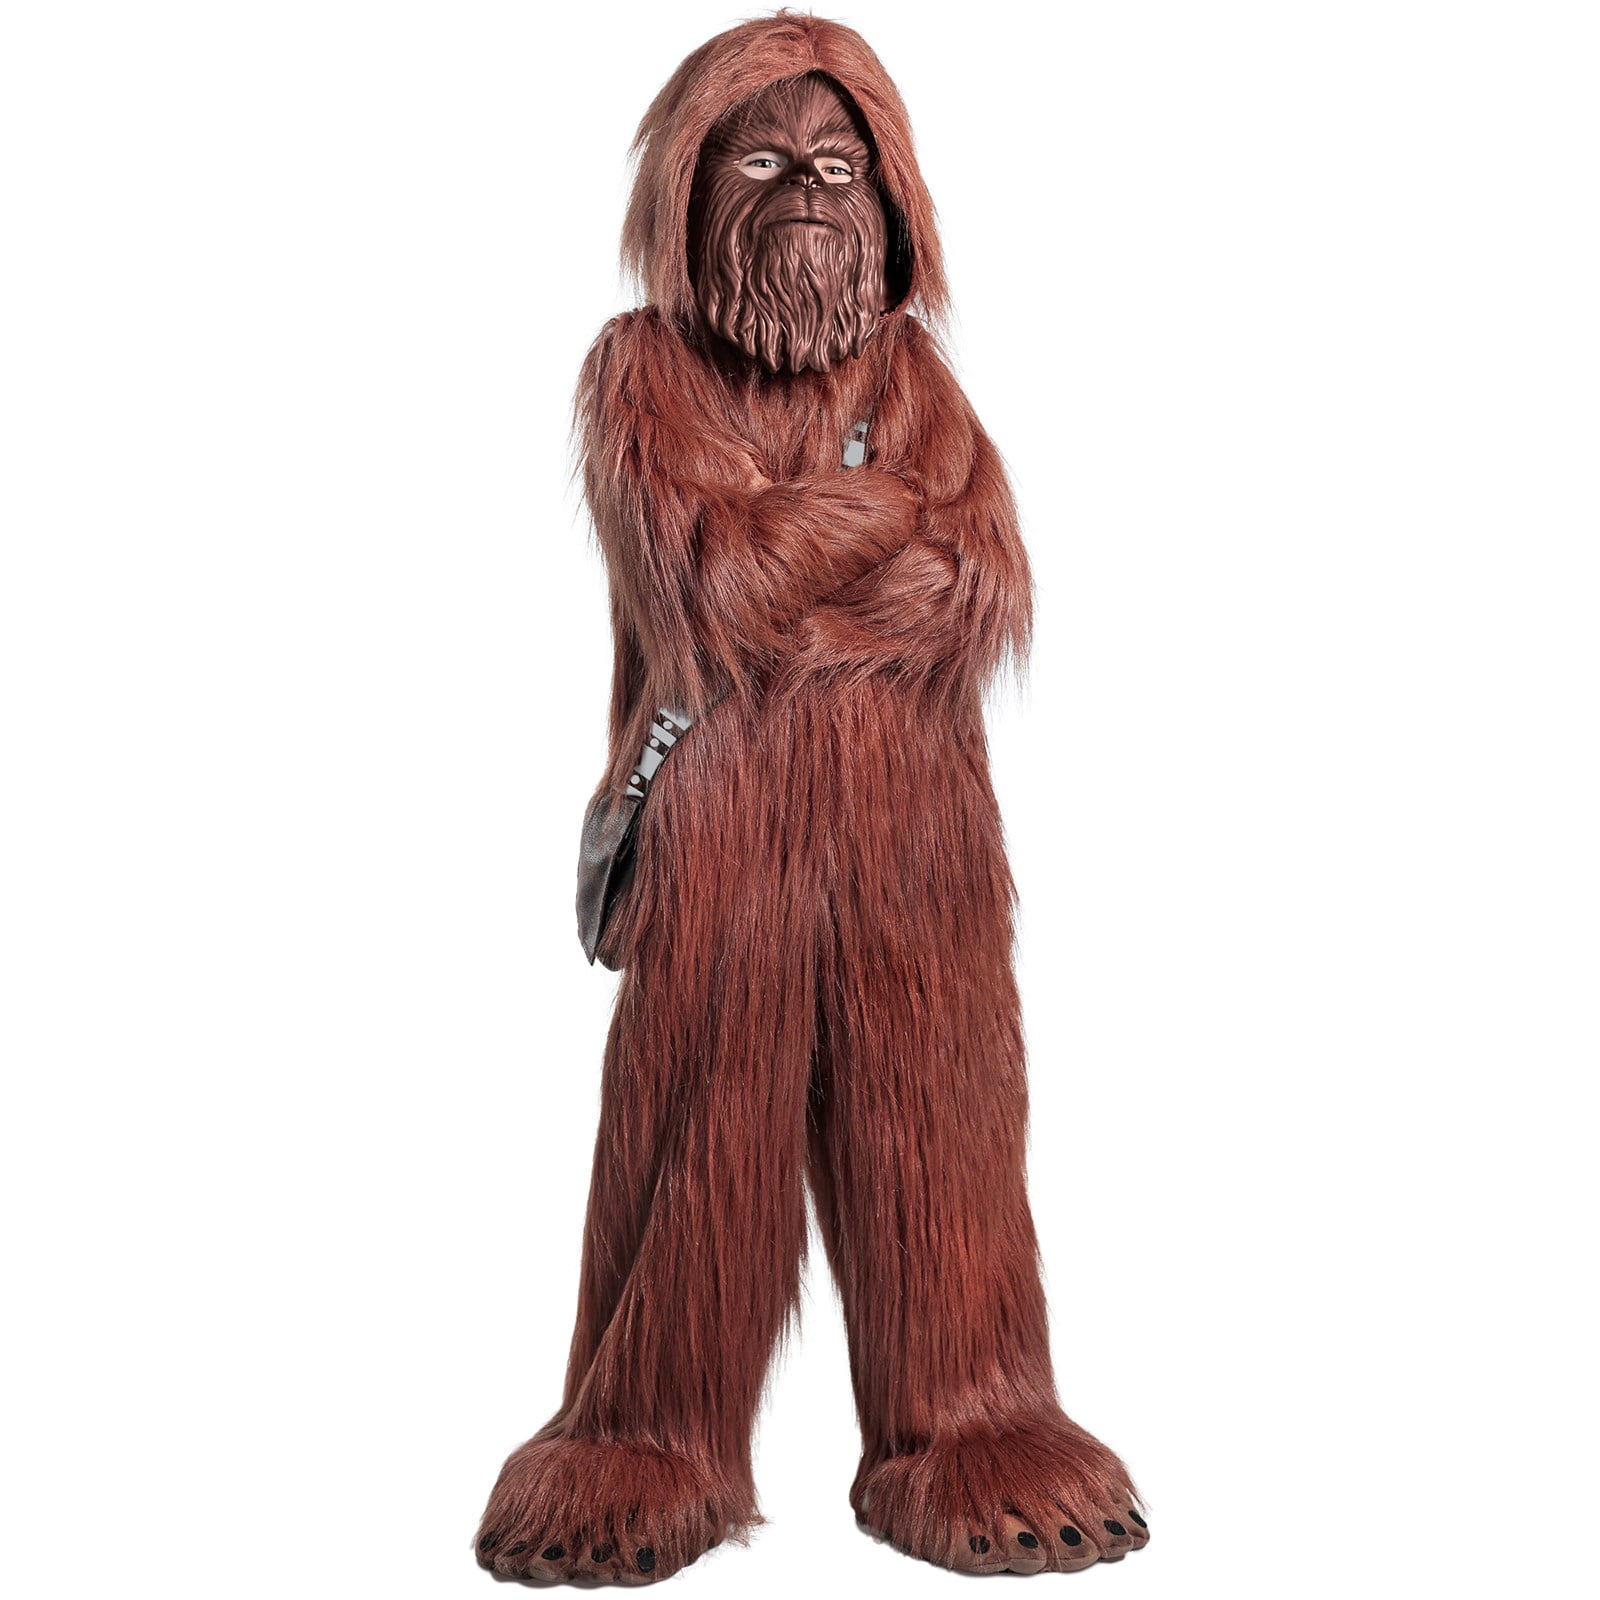 Cosplay Star Wars Chewbacca Costume Halloween Fancy Dress Adult Xmas One Size 